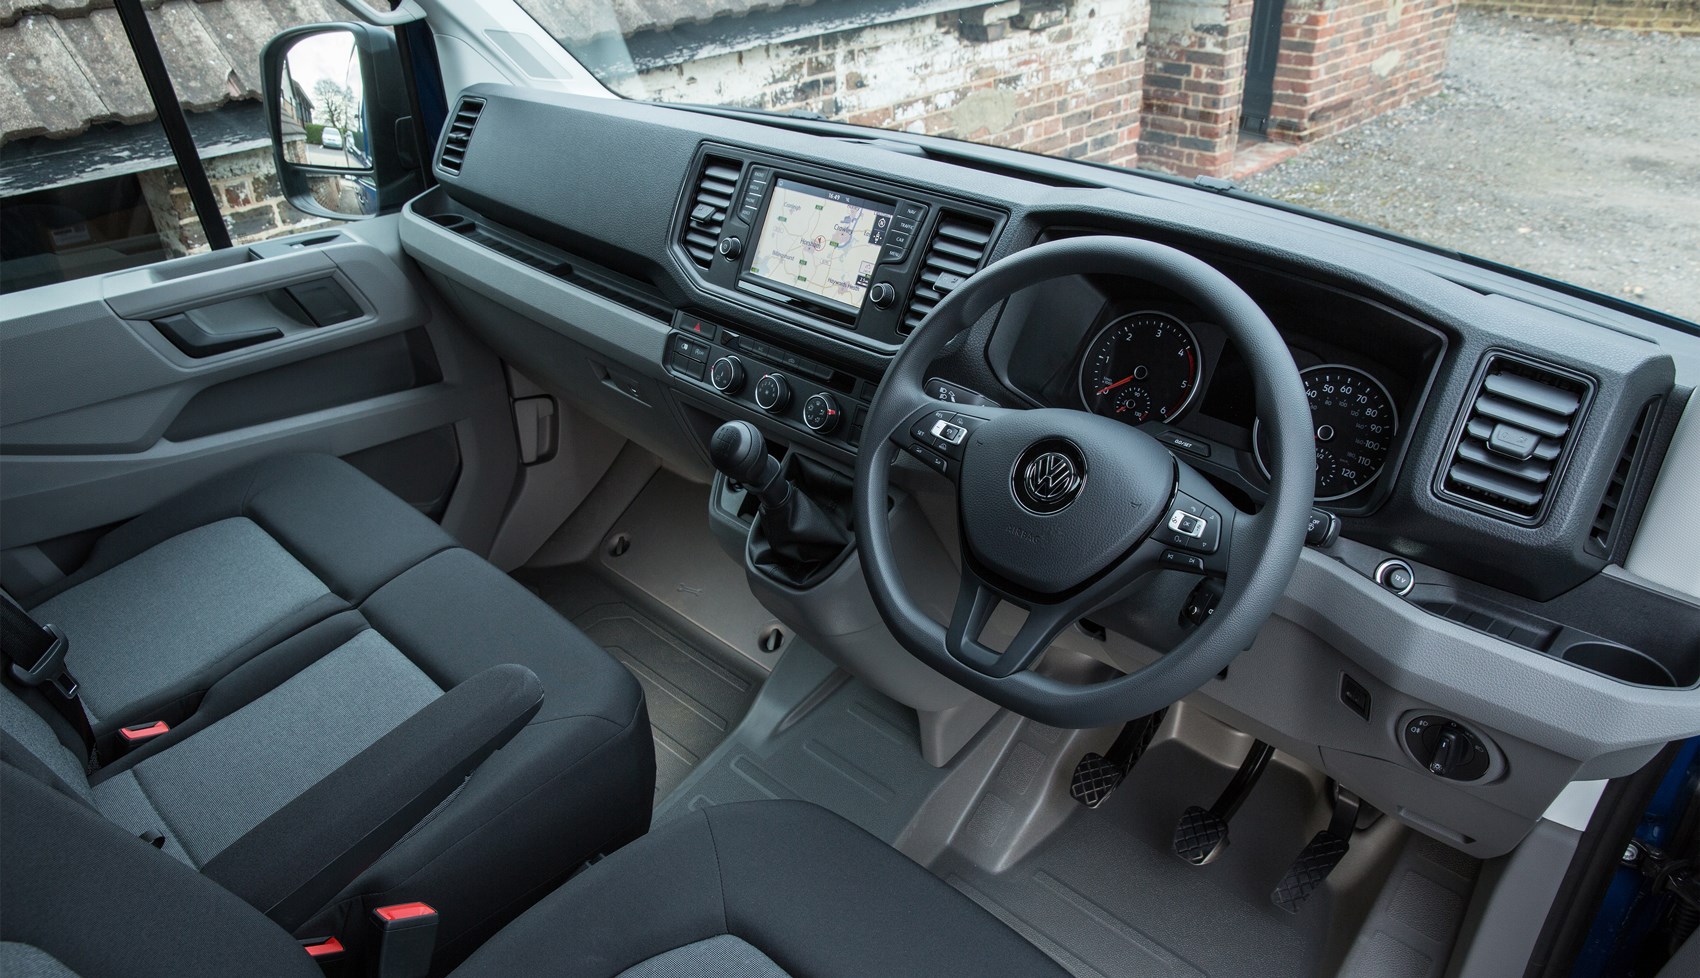 VW Crafter van (2023) review: properly van-tastic